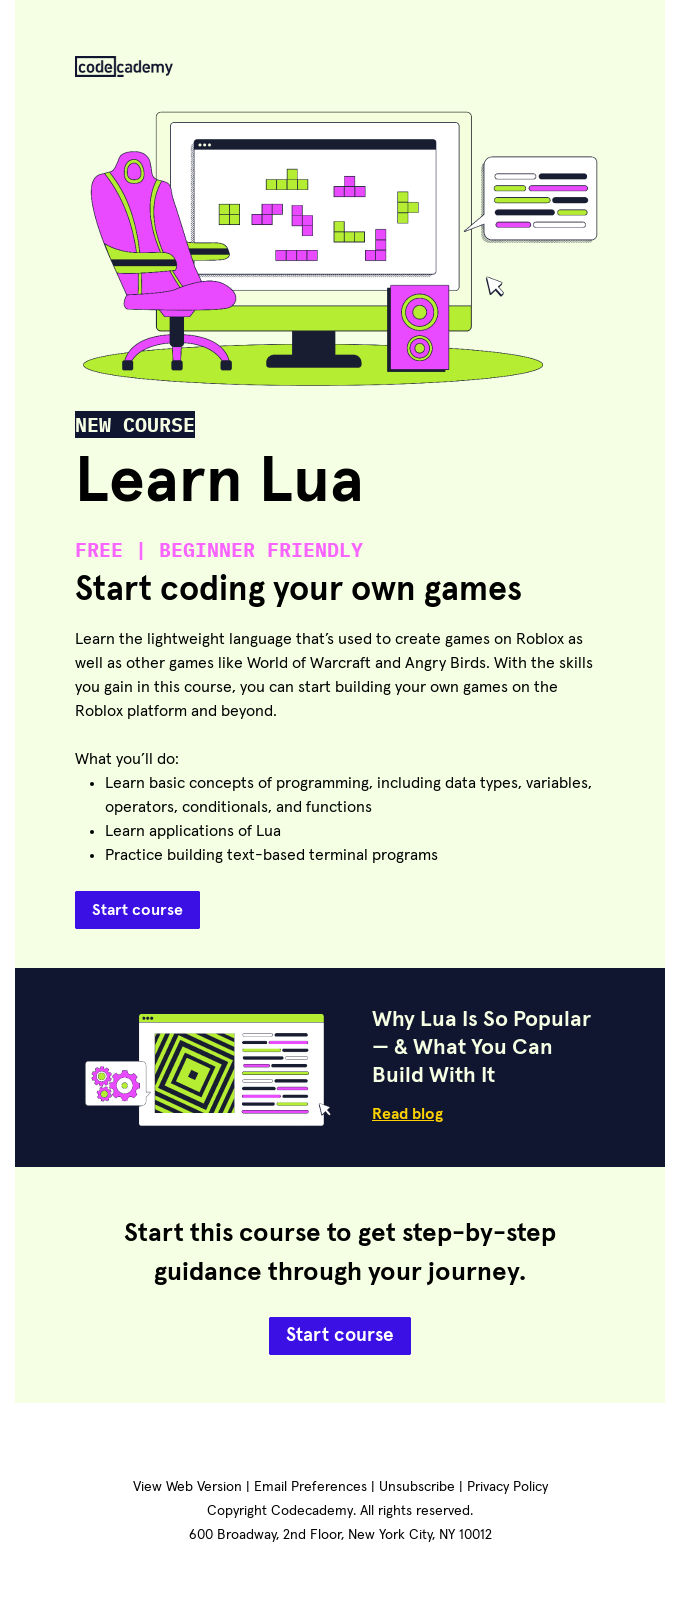 New course: Learn Lua